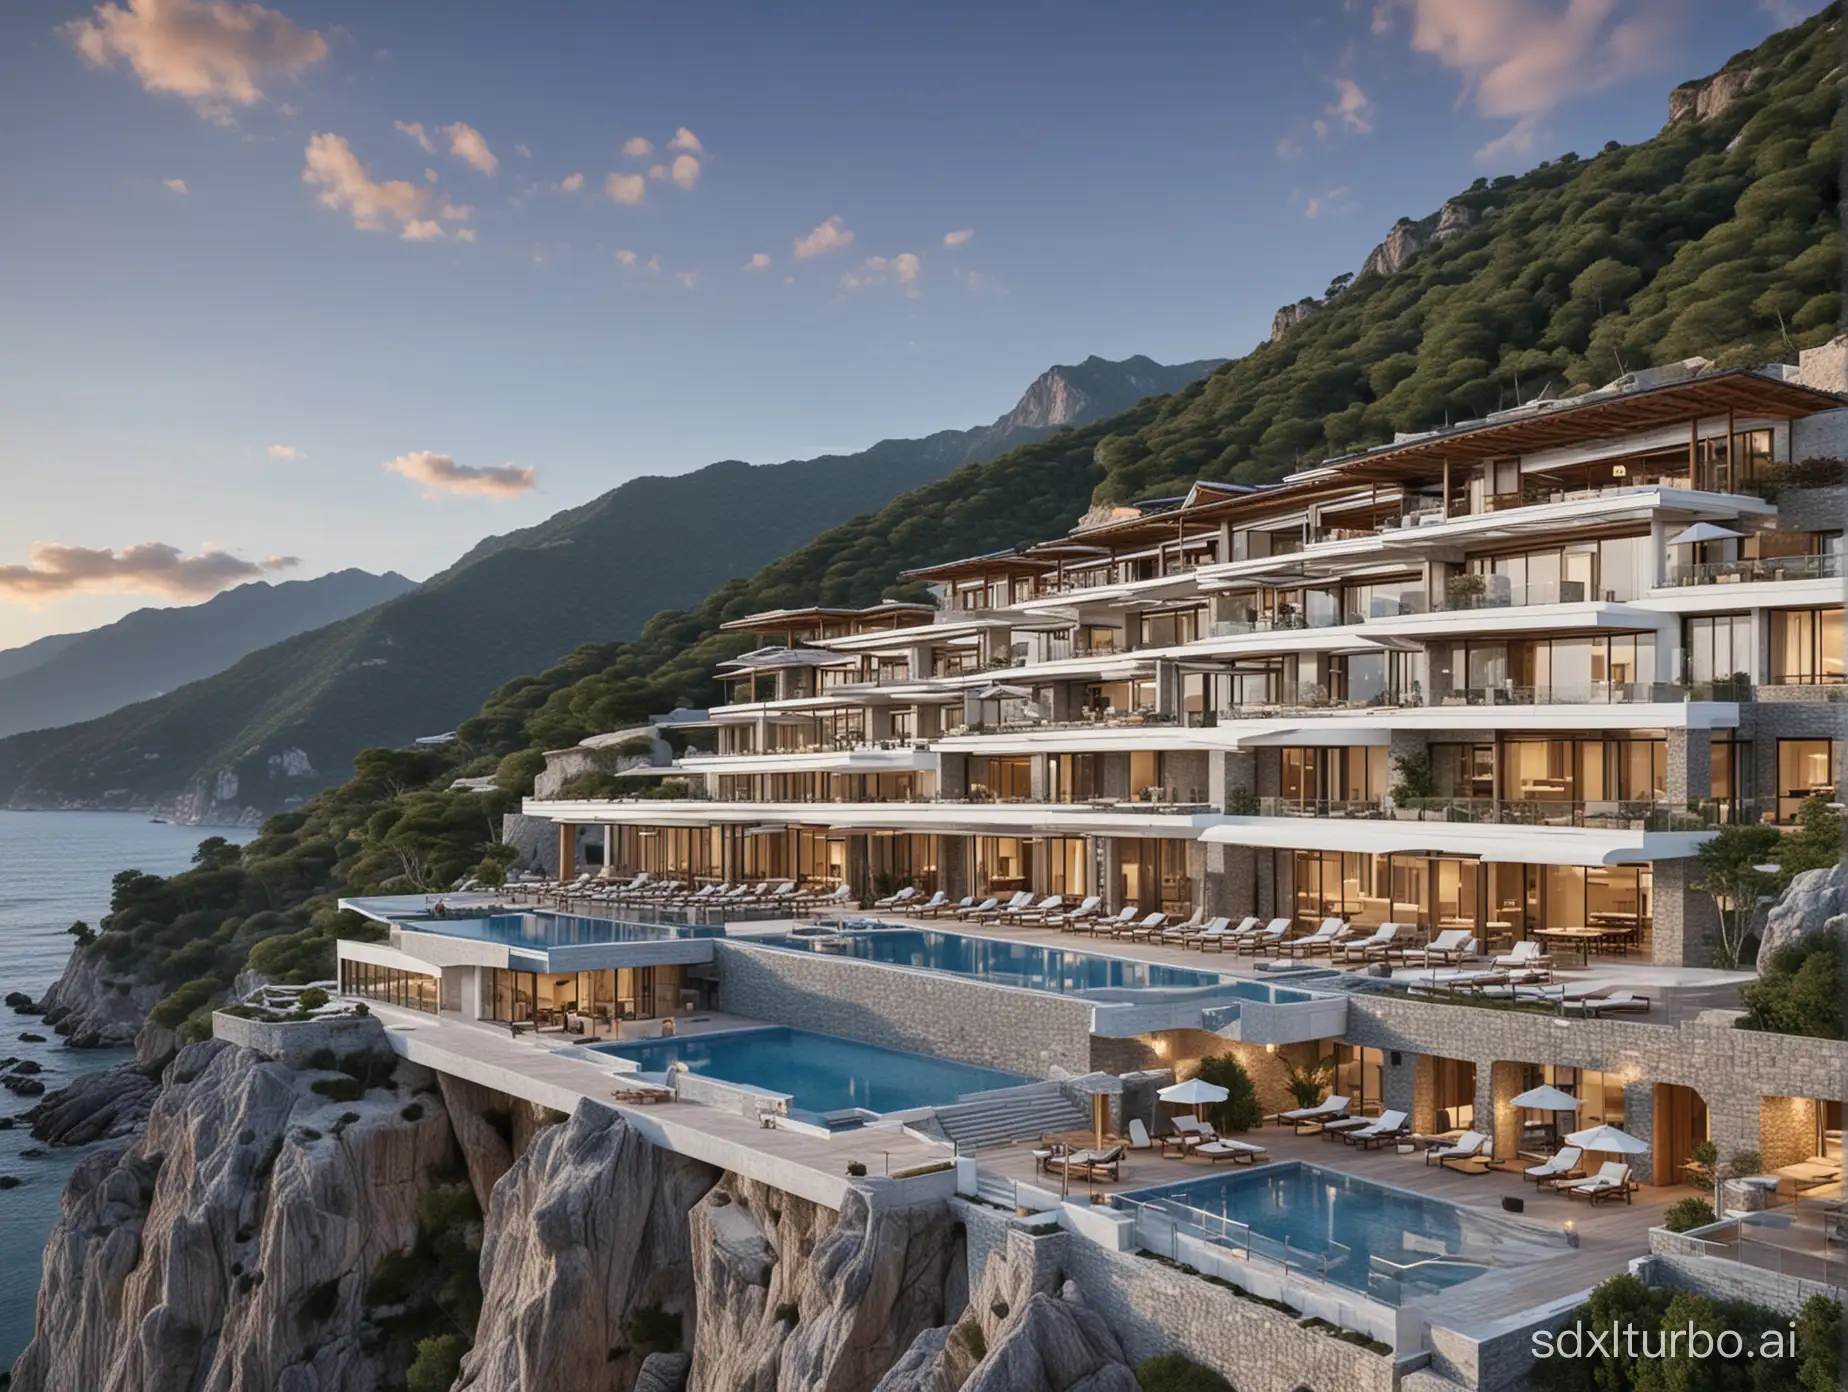 luxury hotel, near the sea, mountain, high quality